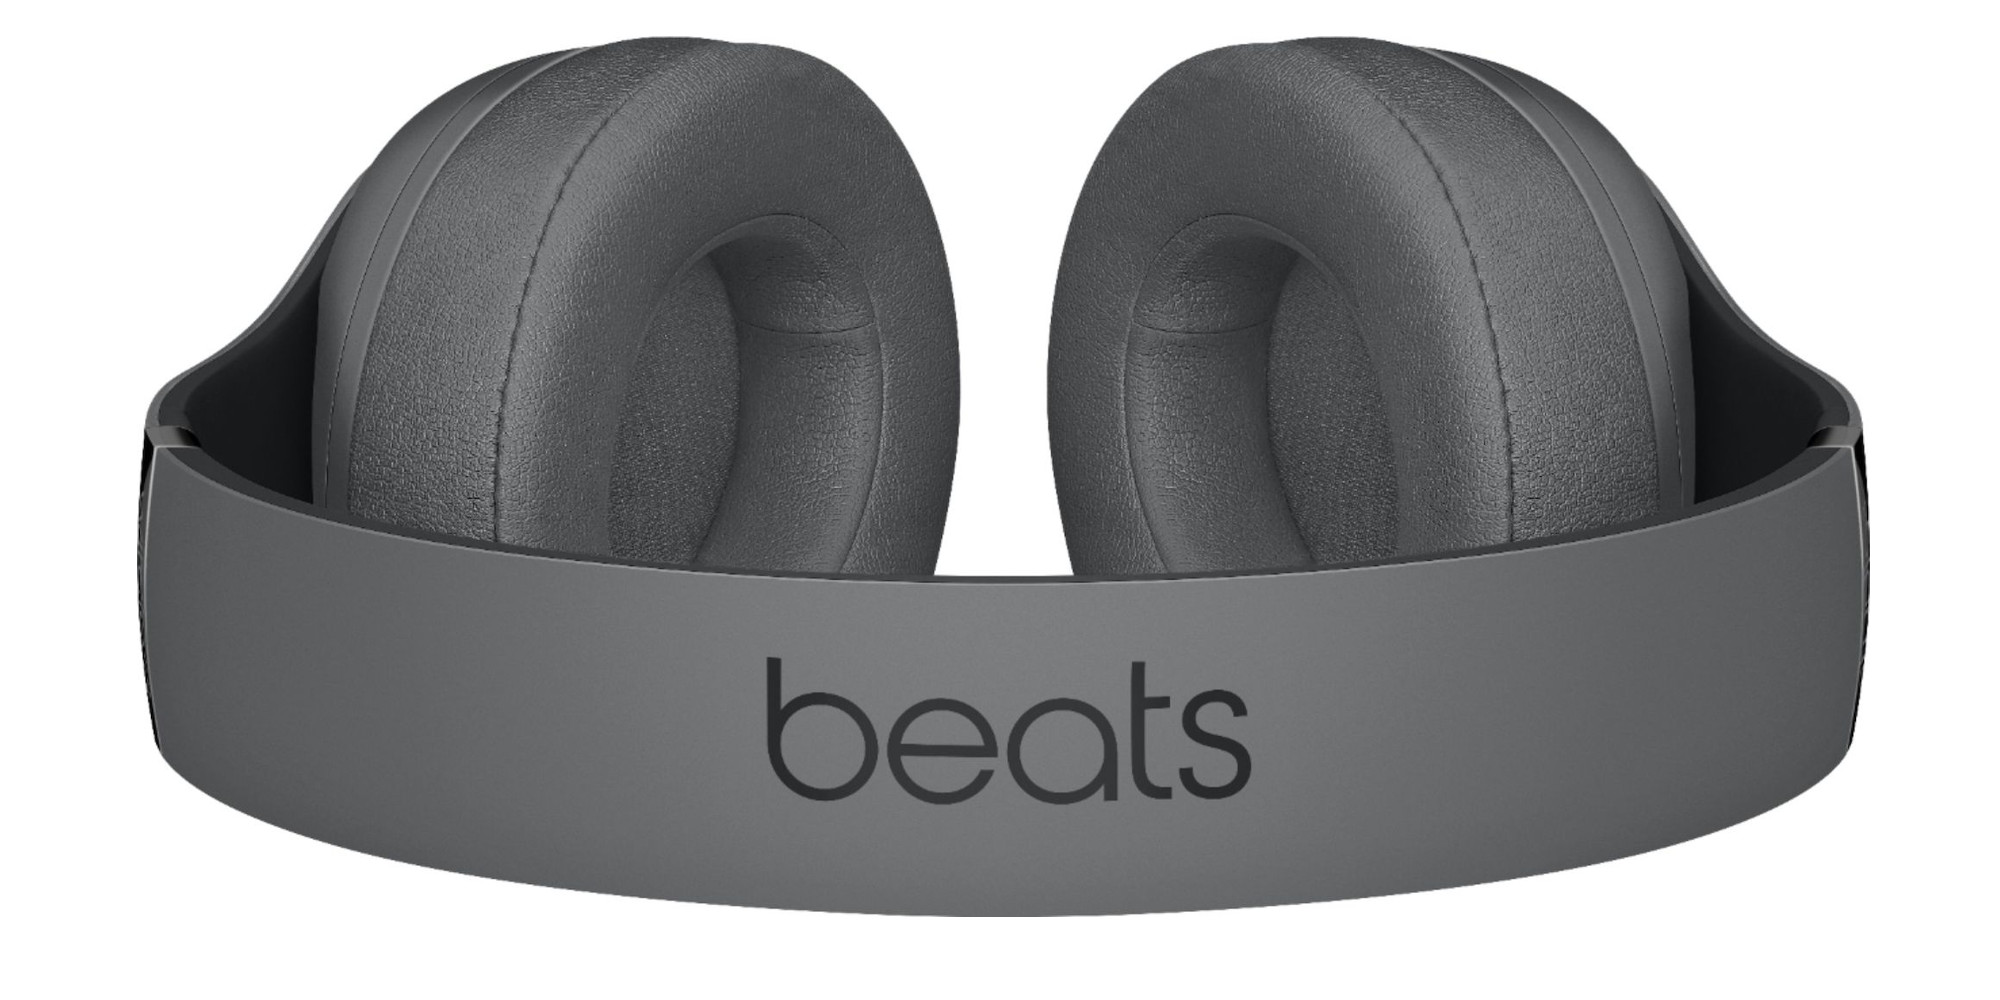 beats wireless headphones $100